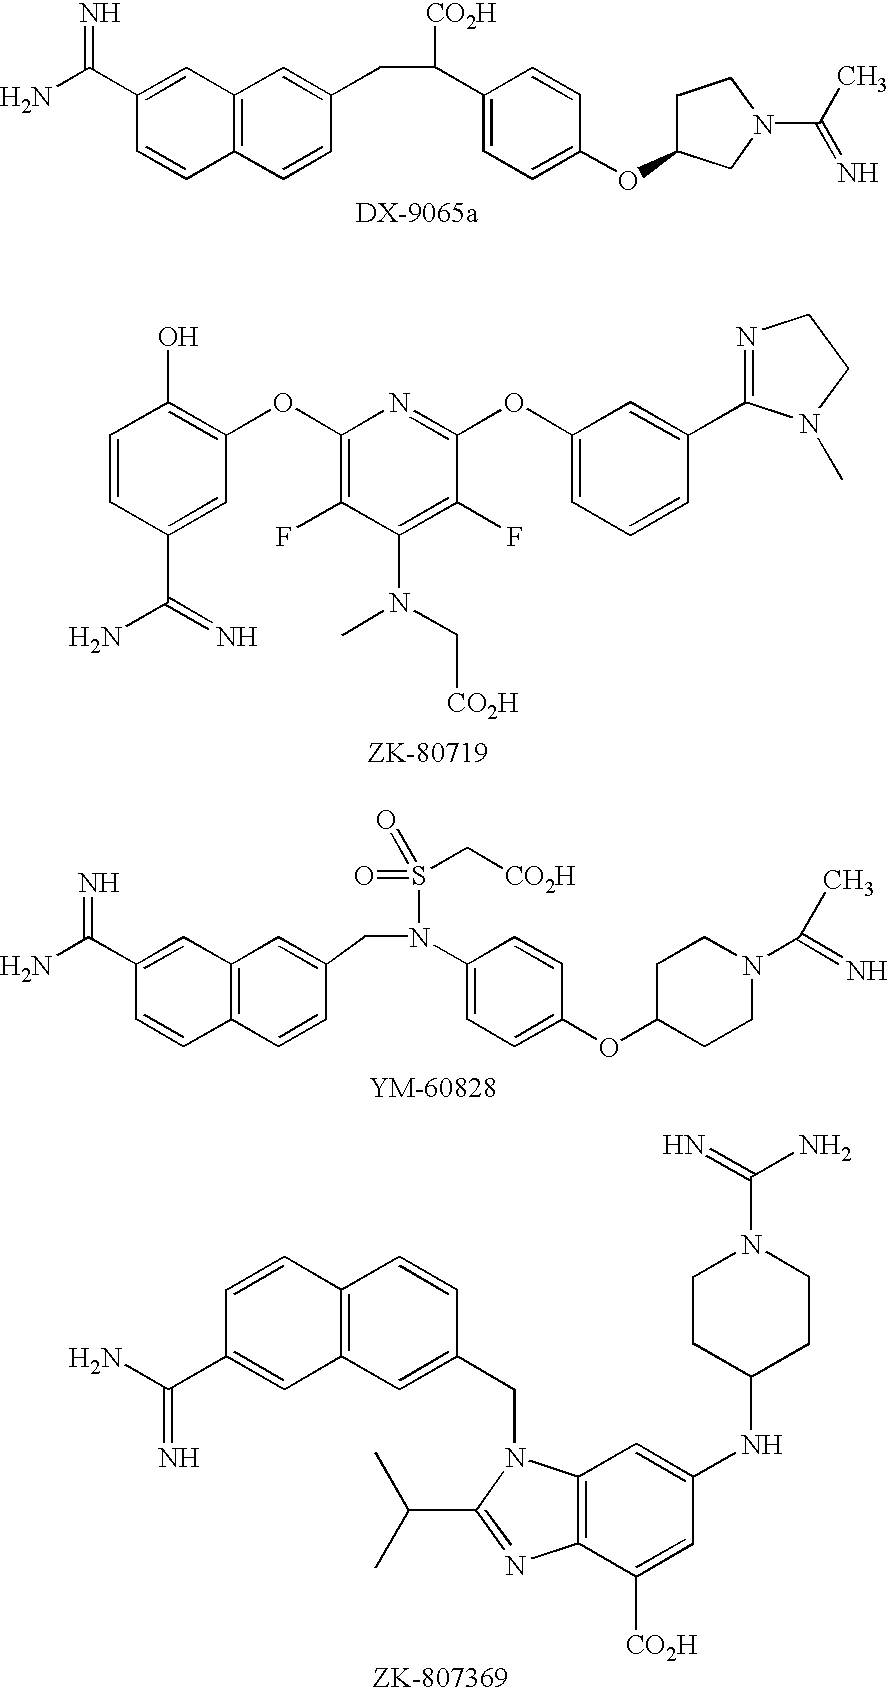 Factor xa inhibitors with aryl-amidines and derivatives, and prodrugs thereof